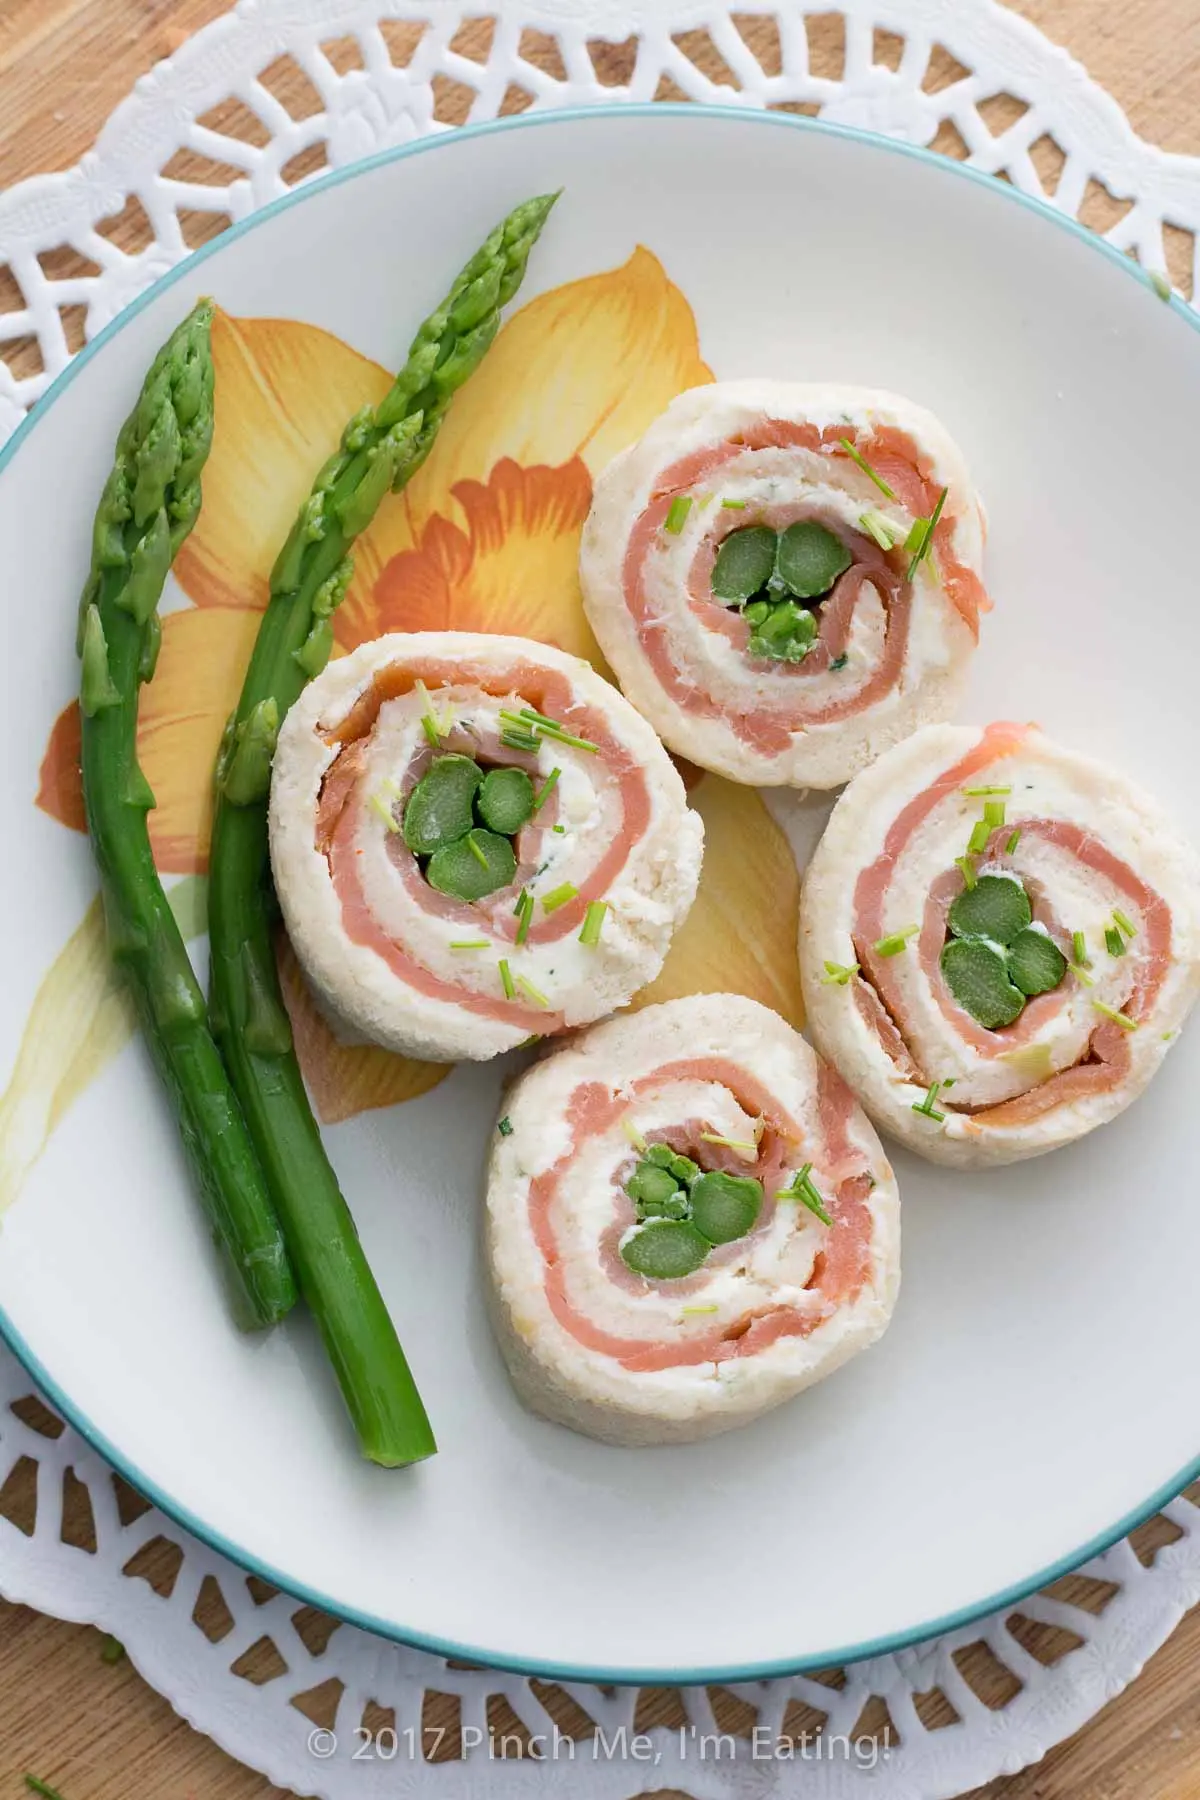 smoked salmon pinwheel sandwiches - What are pinwheel sandwiches made of